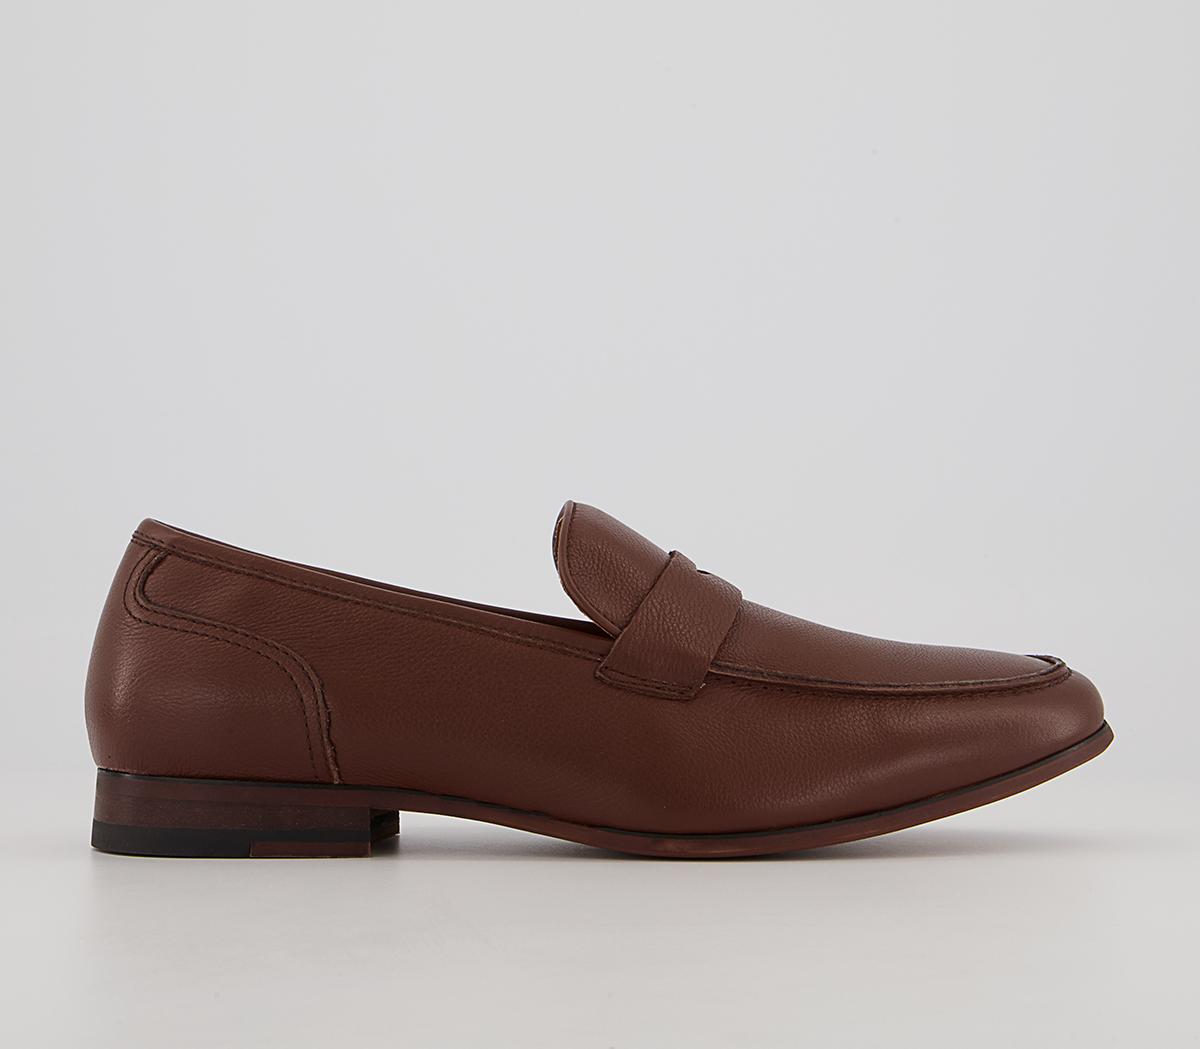 OfficeMarvellous Summer Saddle LoafersTan Leather